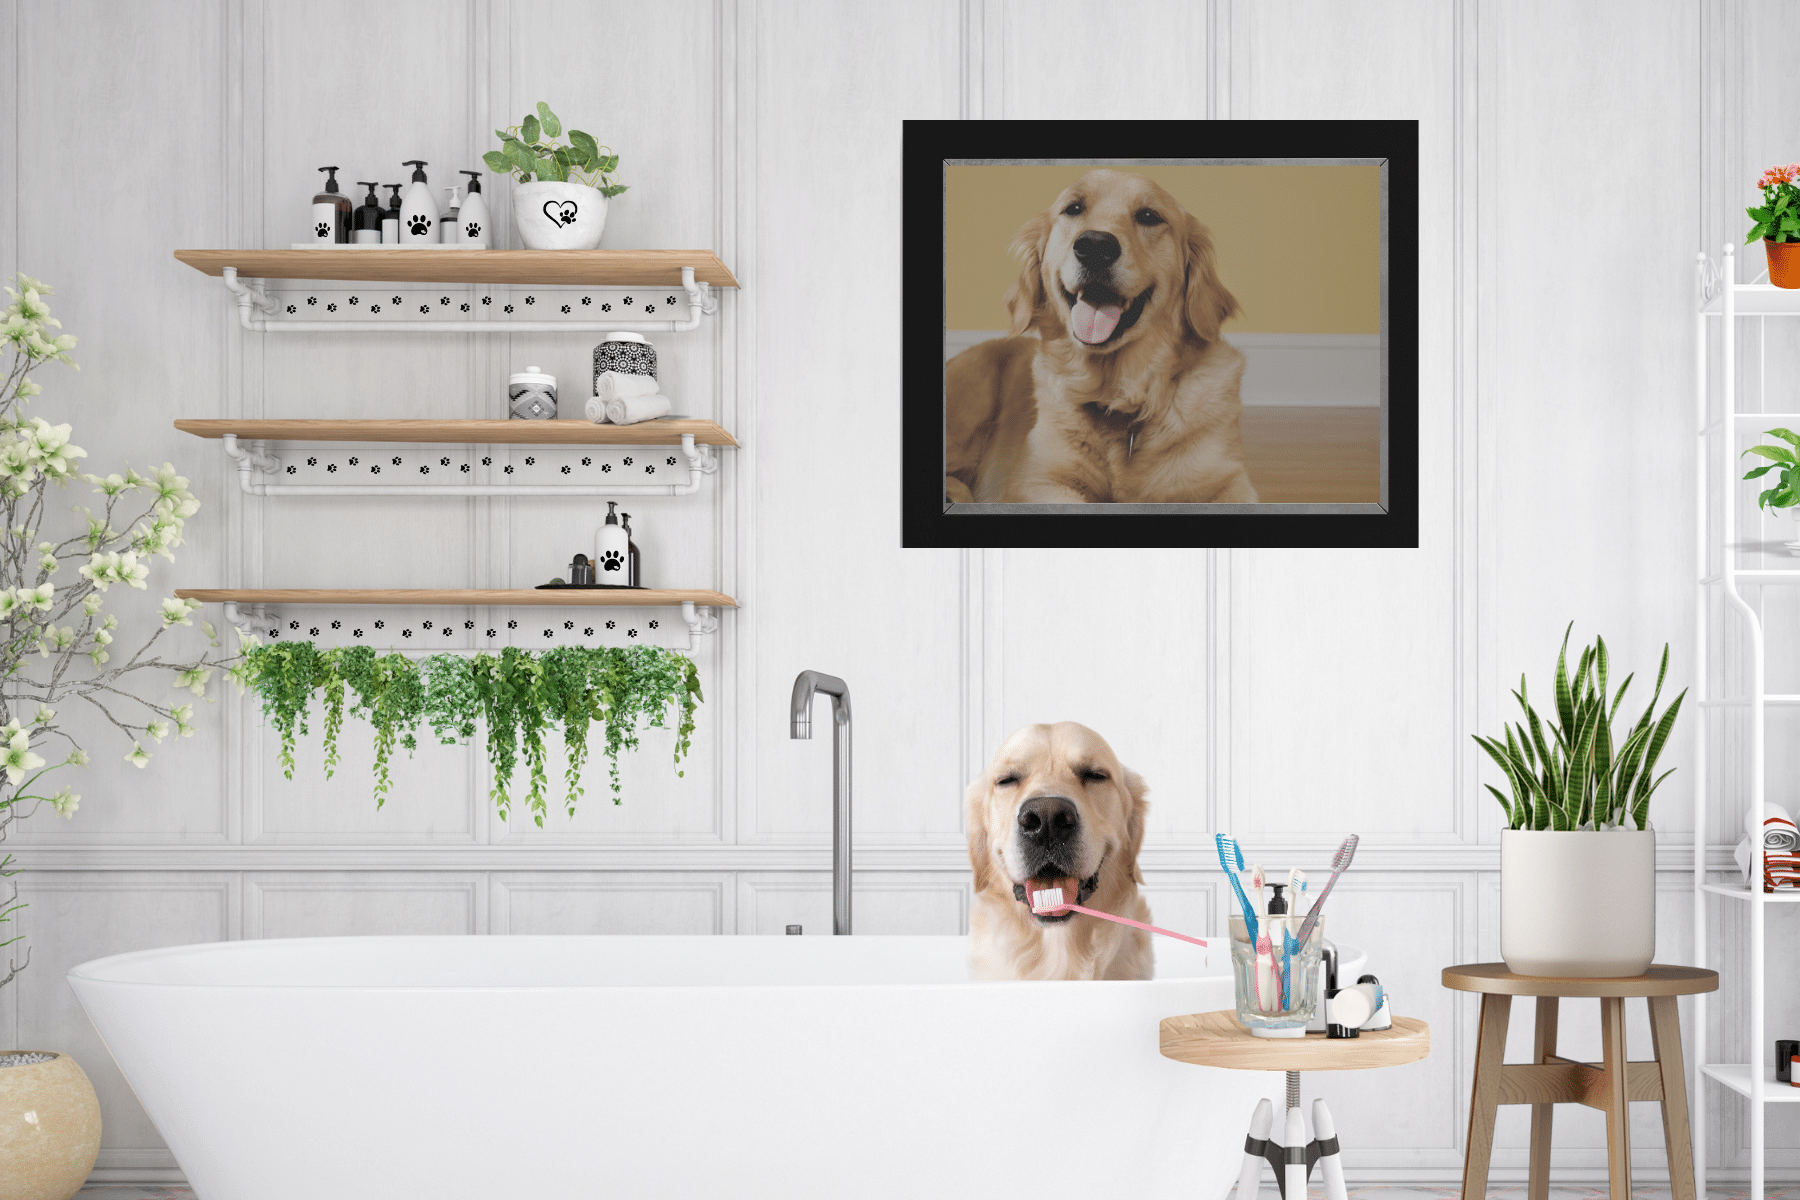 Best Dog Themed Bathroom Decor Ideas toothbrush holder